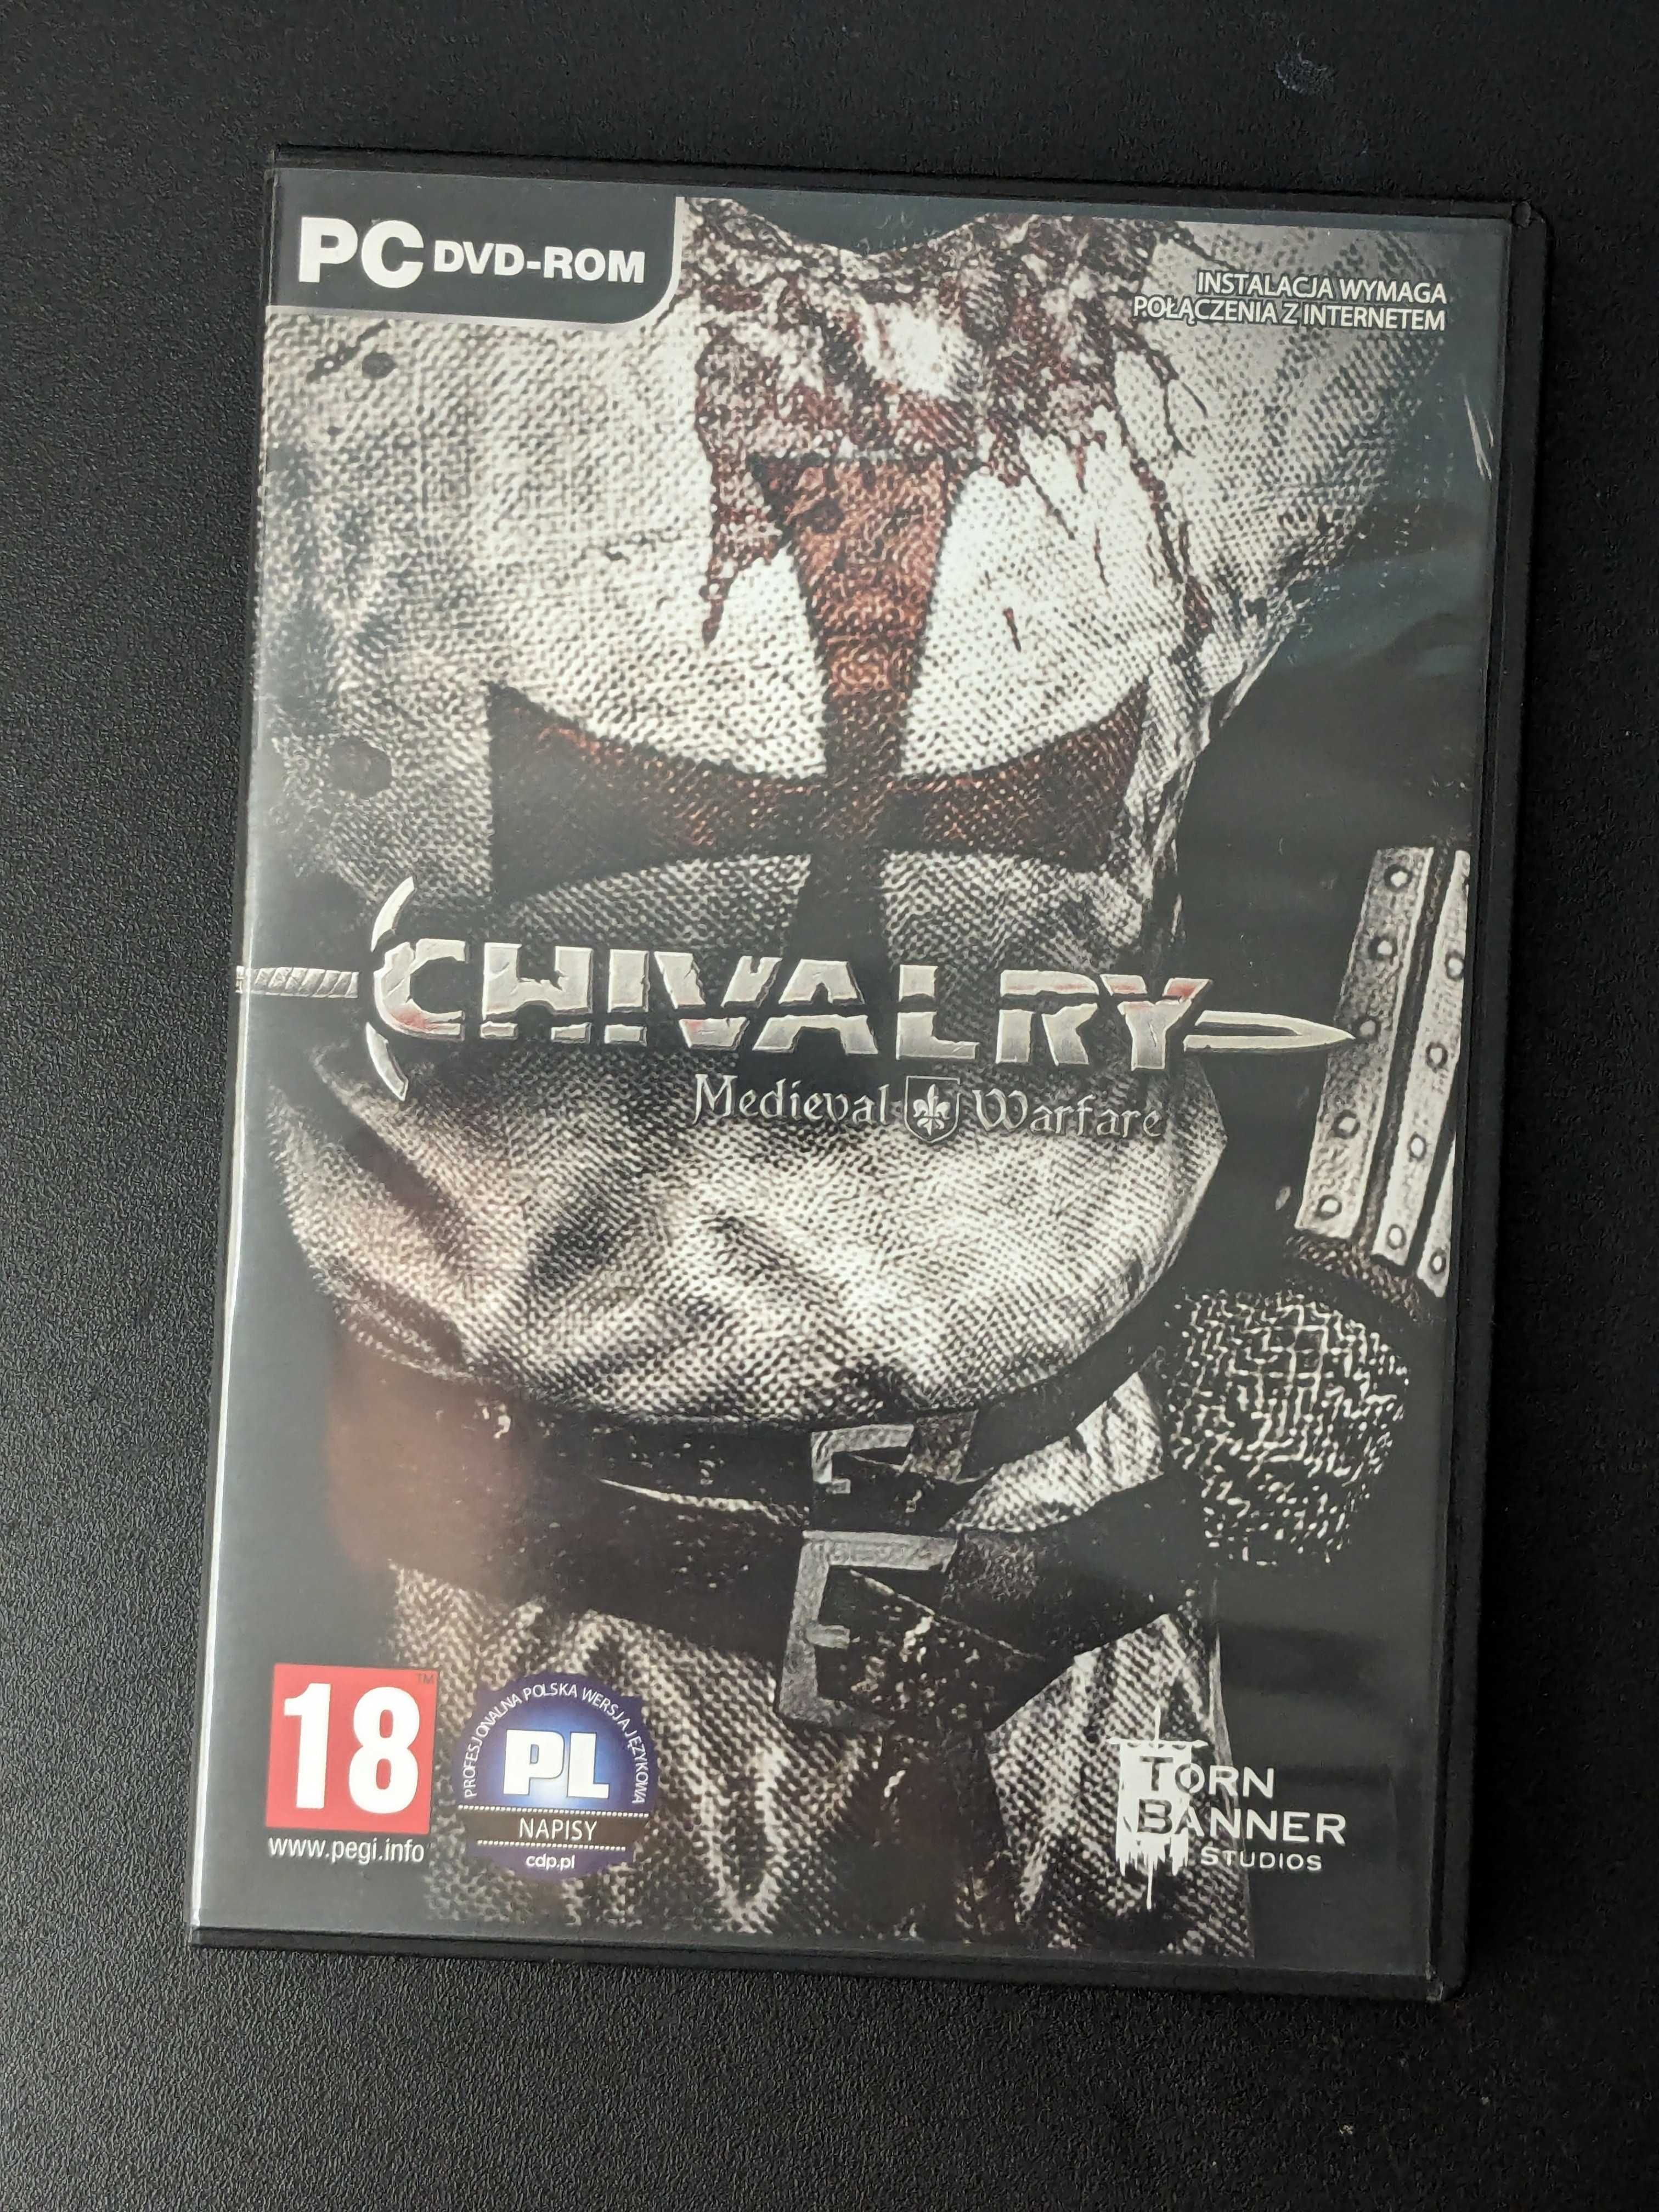 Płyta + pudełko, gra PC CHIVALRY Medival Warfare